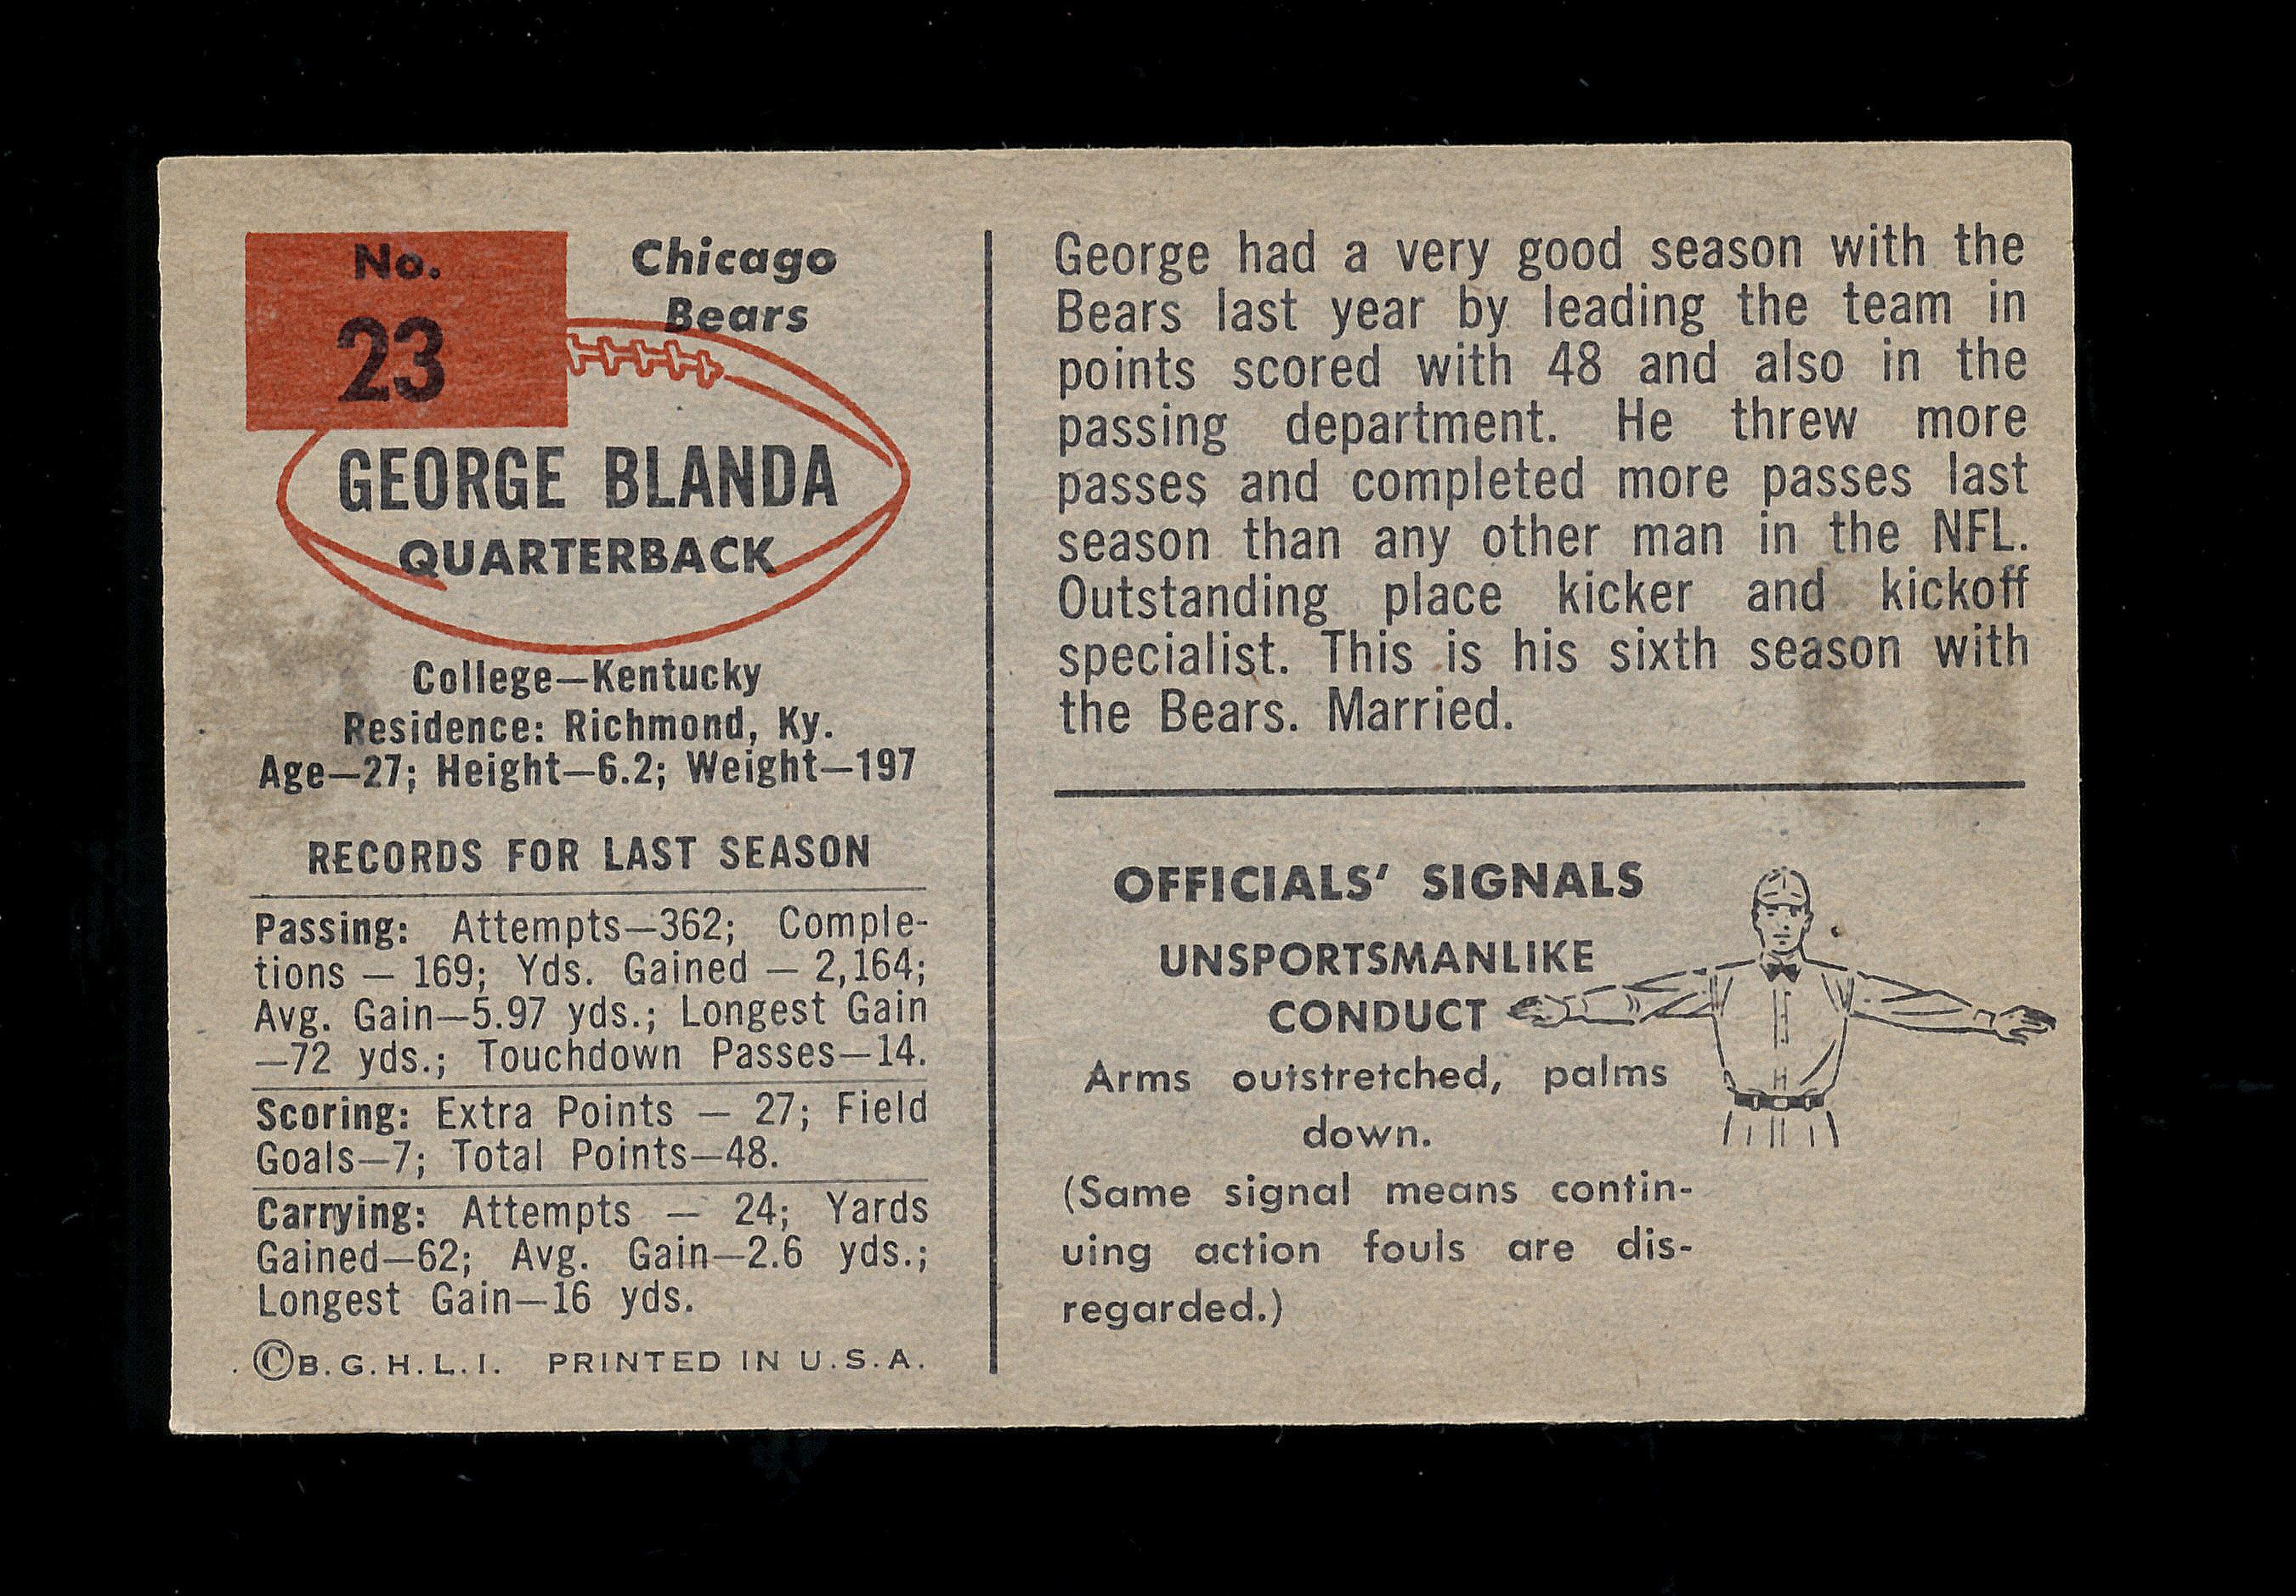 1954 Bowman ROOKIE Football Card #23 Rookie Hall of Famer George Blanda Chi